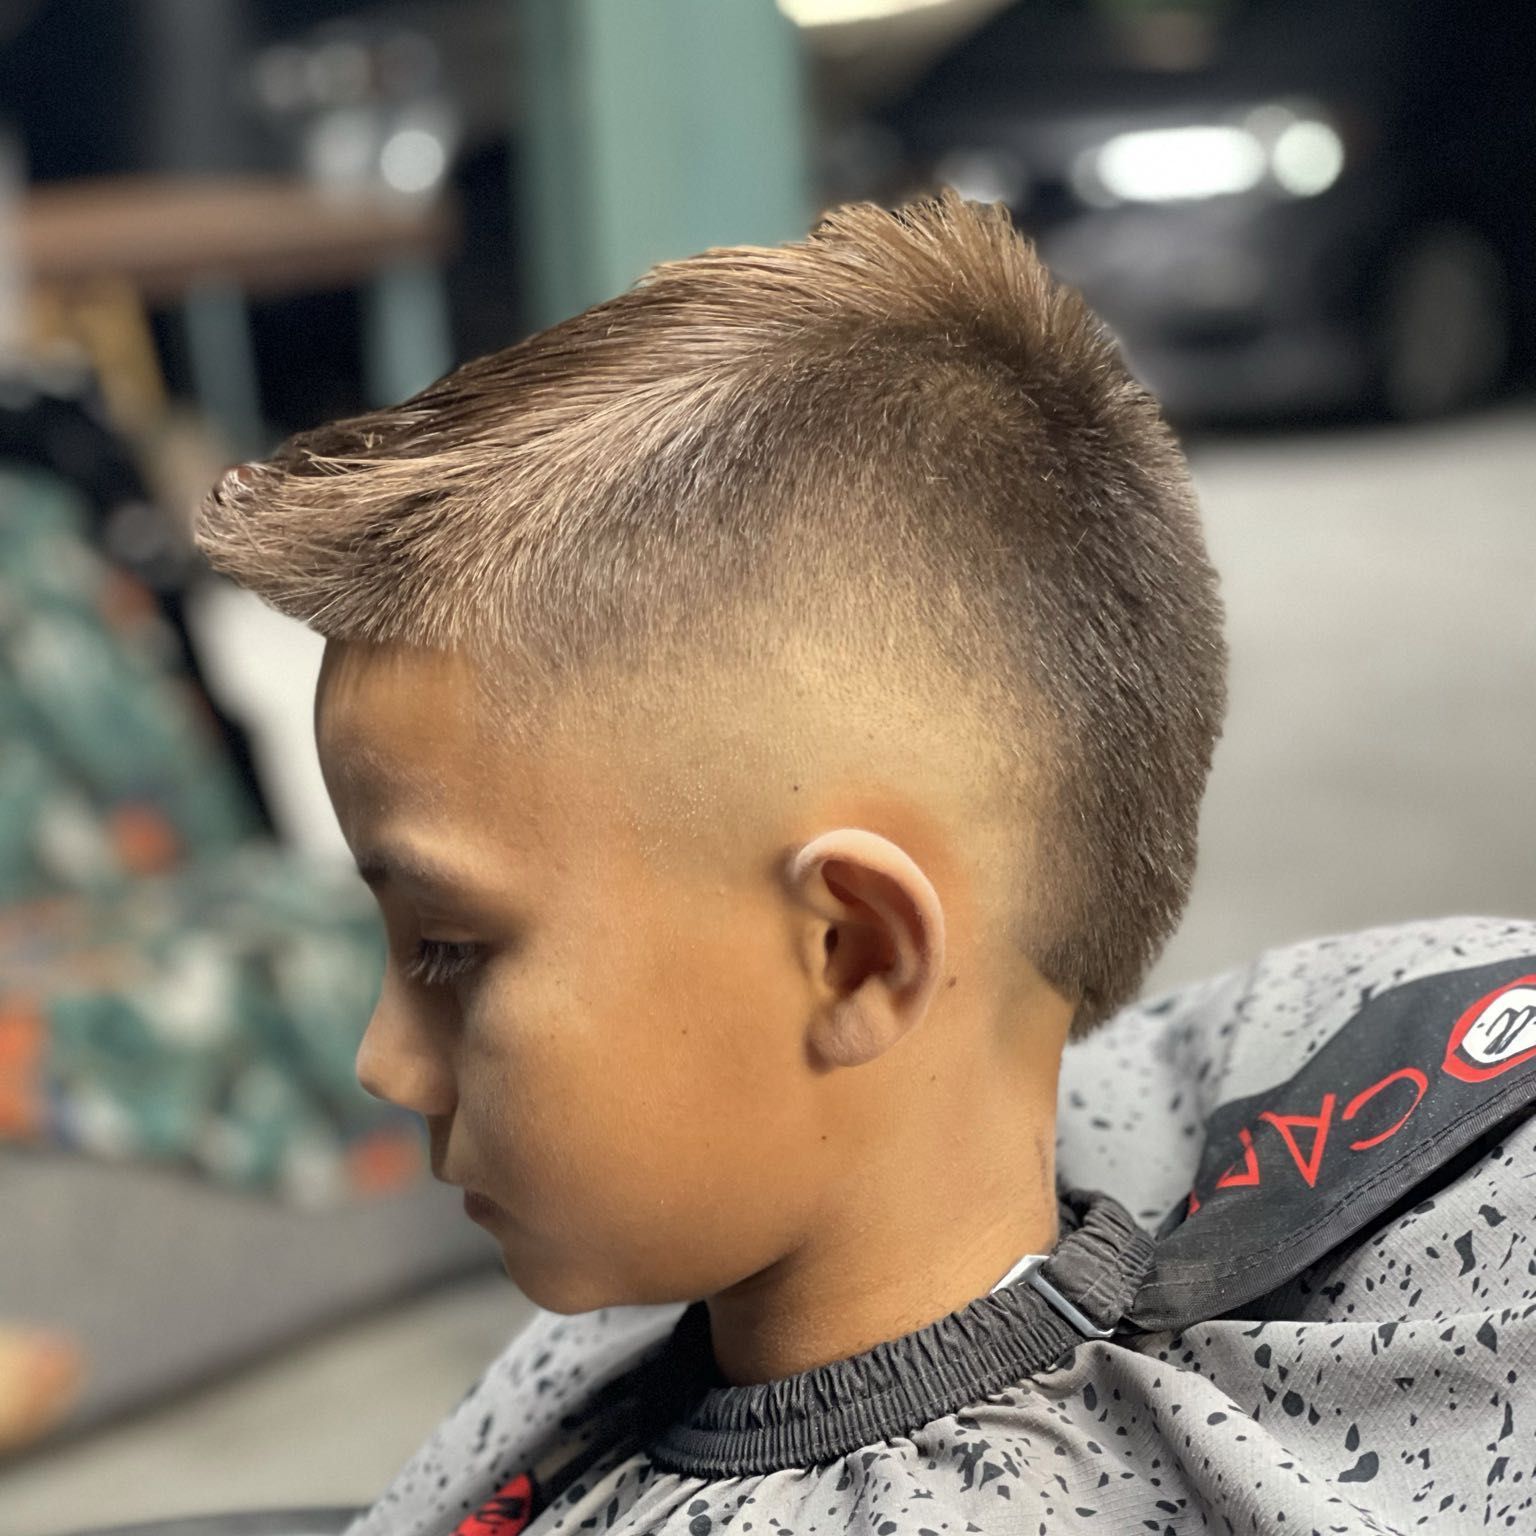 Kids Haircuts portfolio